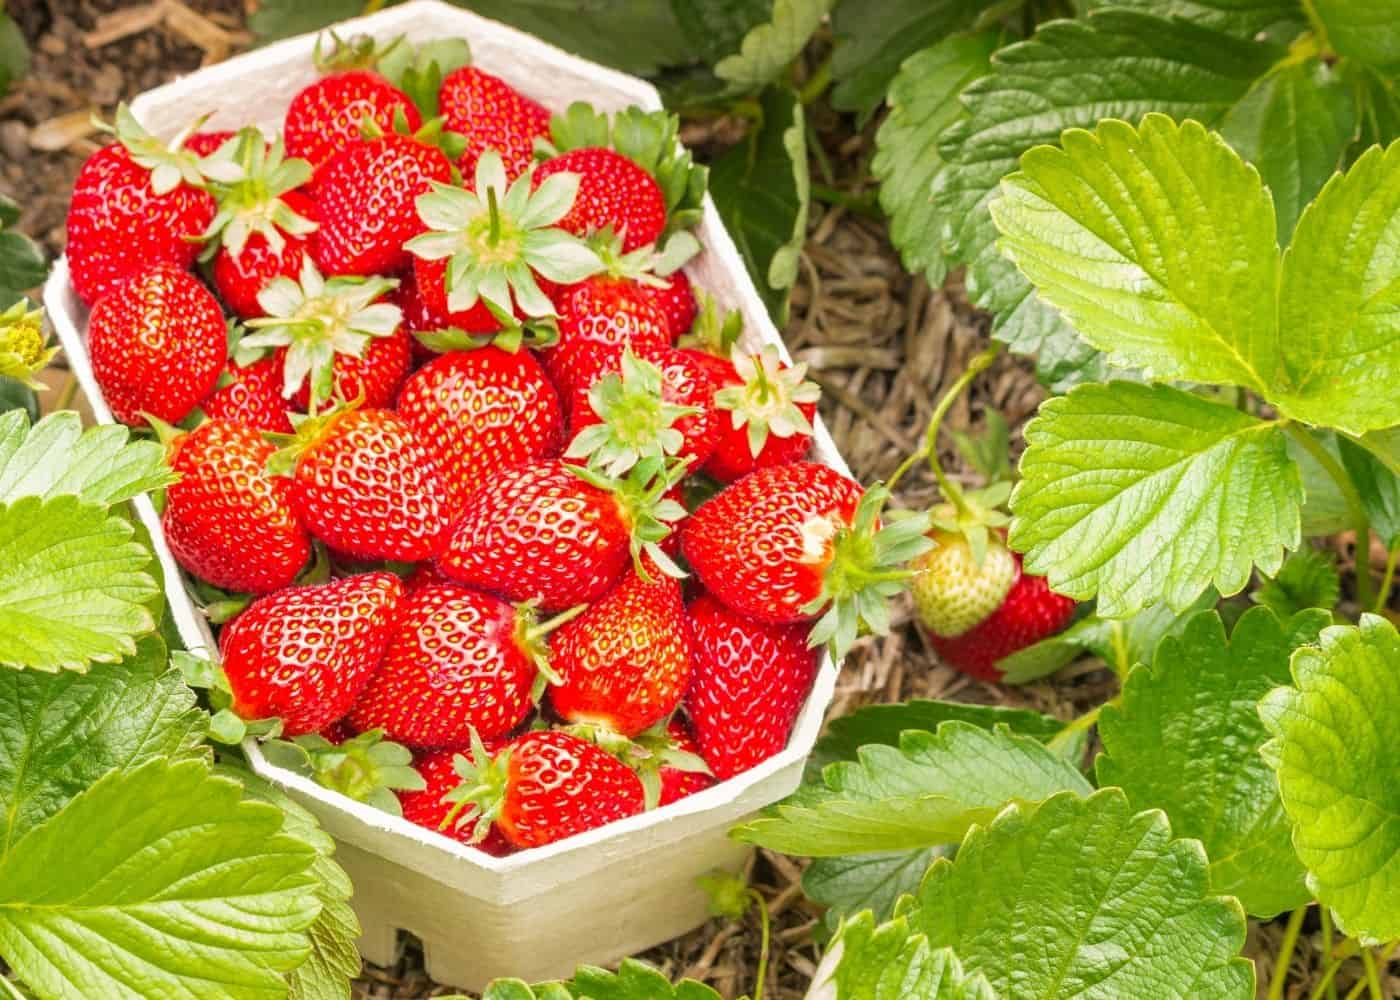 Companion plants for strawberries